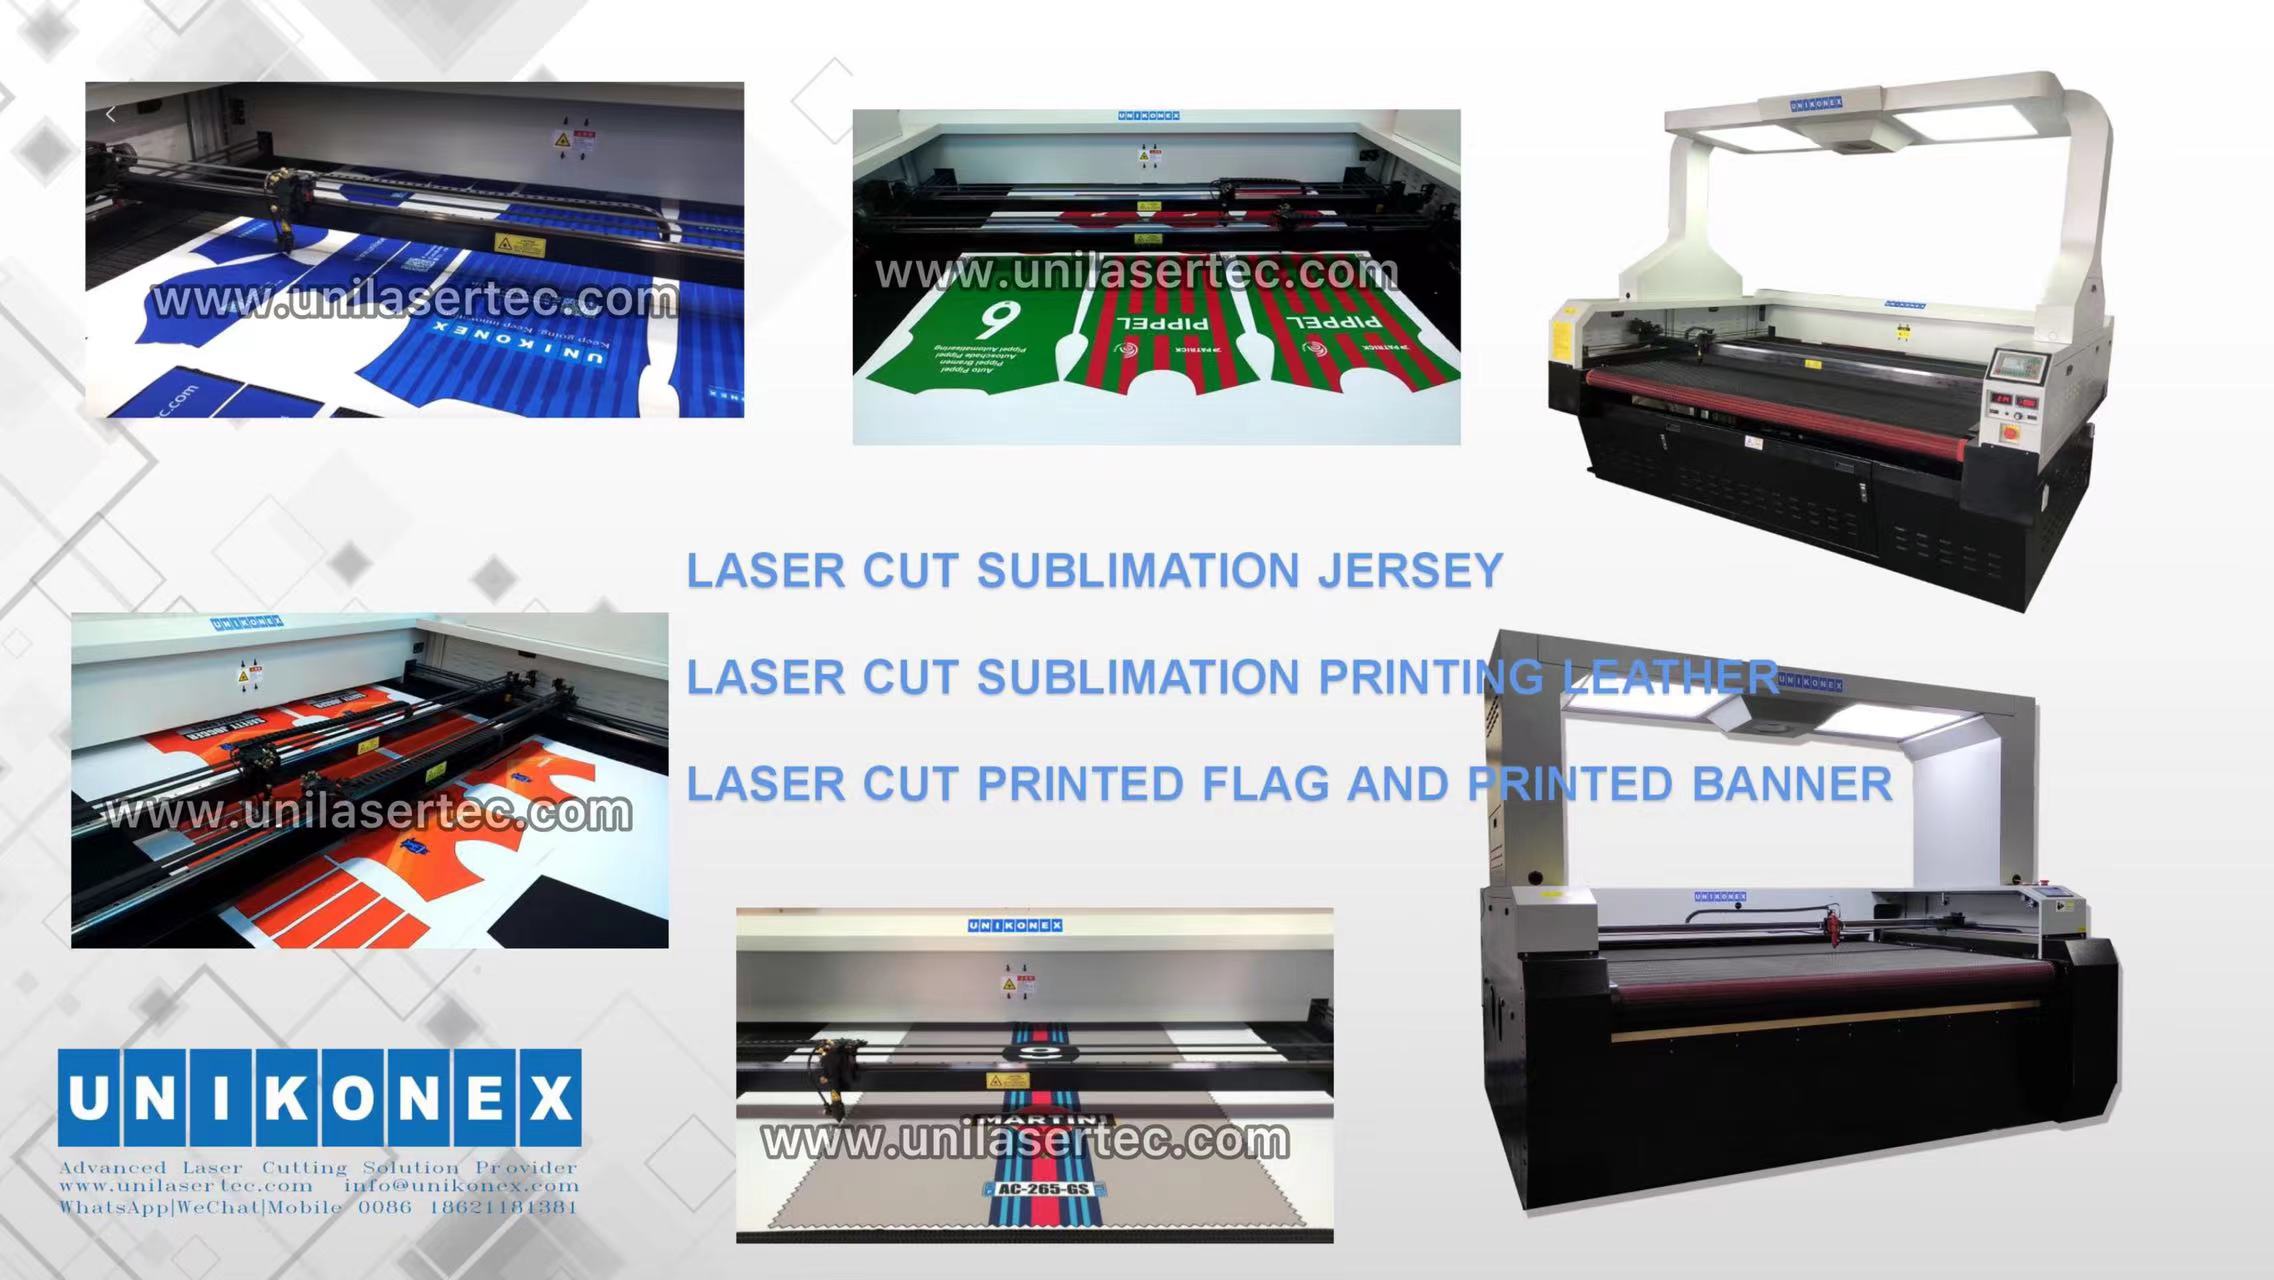 Unikonex fabric laser cutting machine